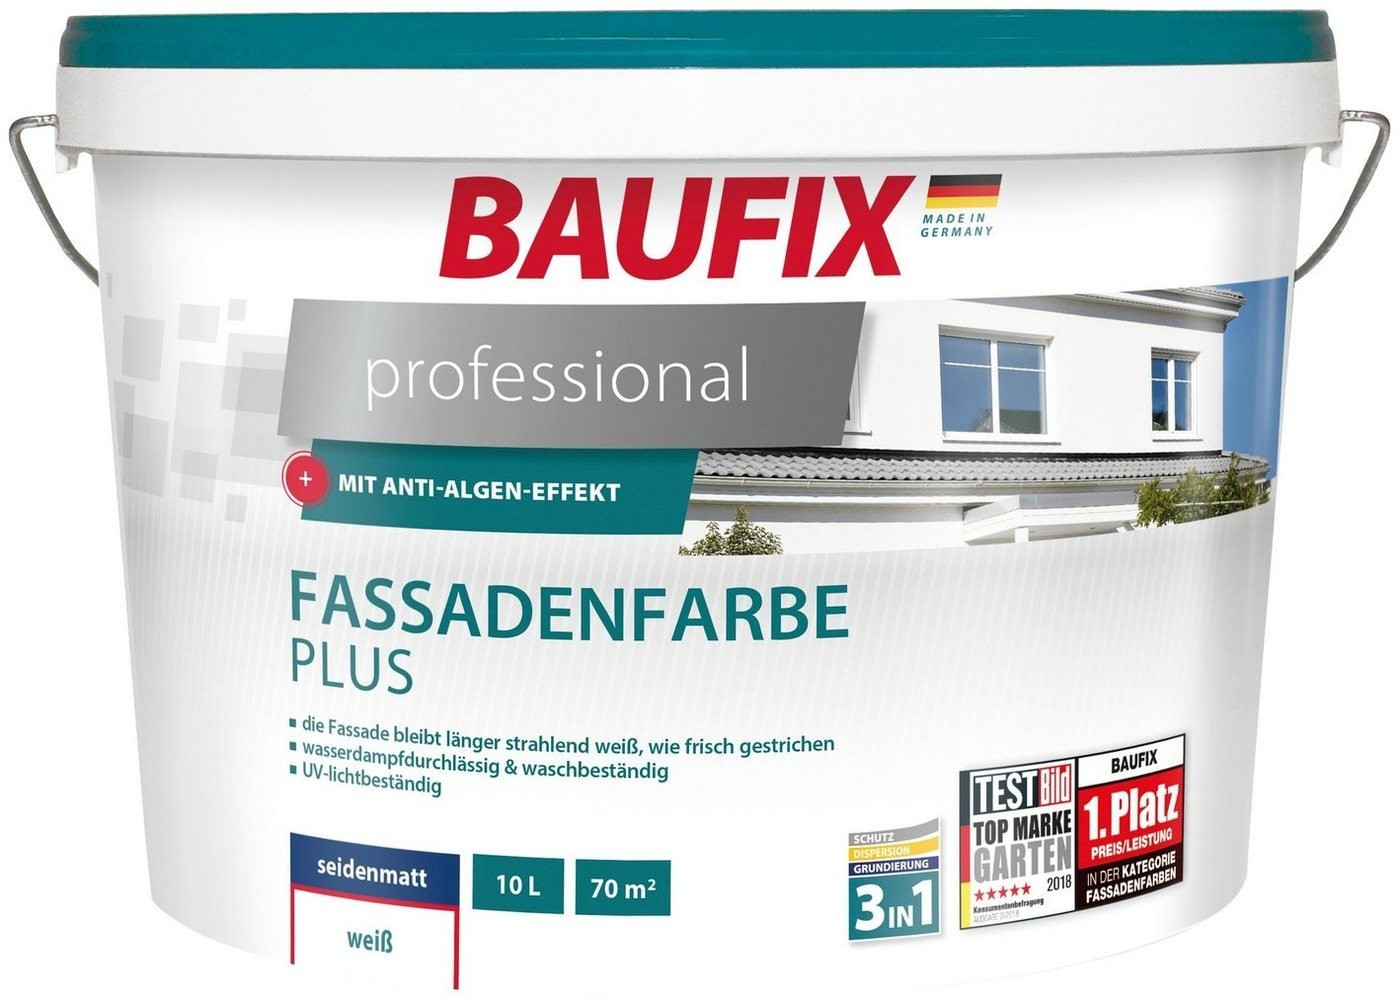 Baufix professional l | ab Fassadenfarbe € Plus 37,99 10 bei Preisvergleich